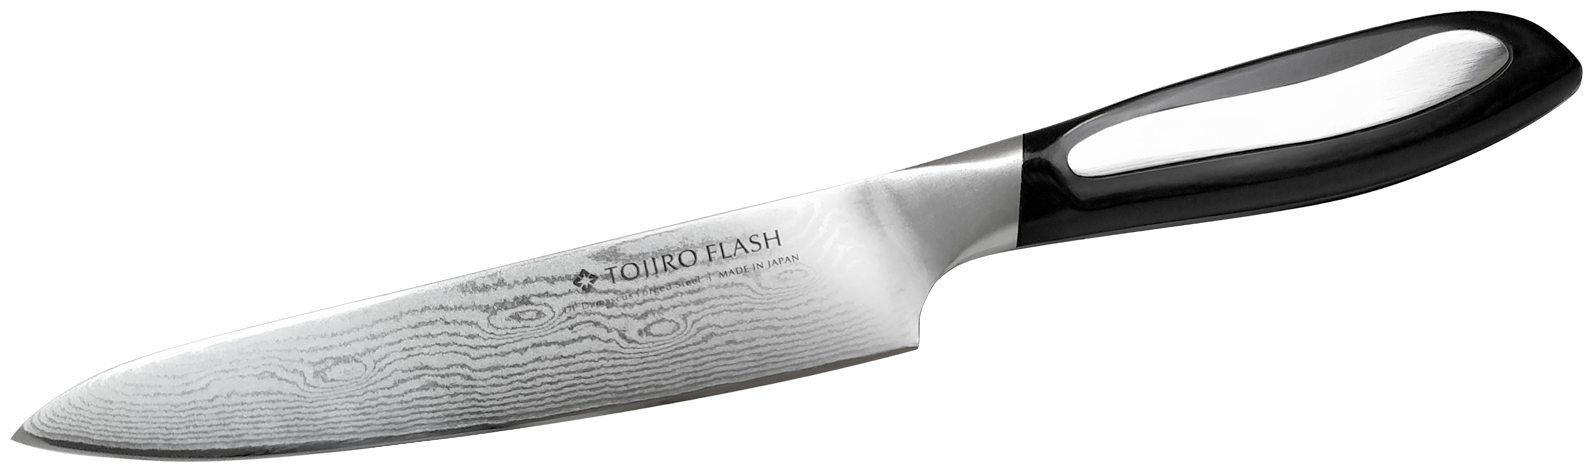 Кухонный Нож Универсальный TOJIRO FF-UT150